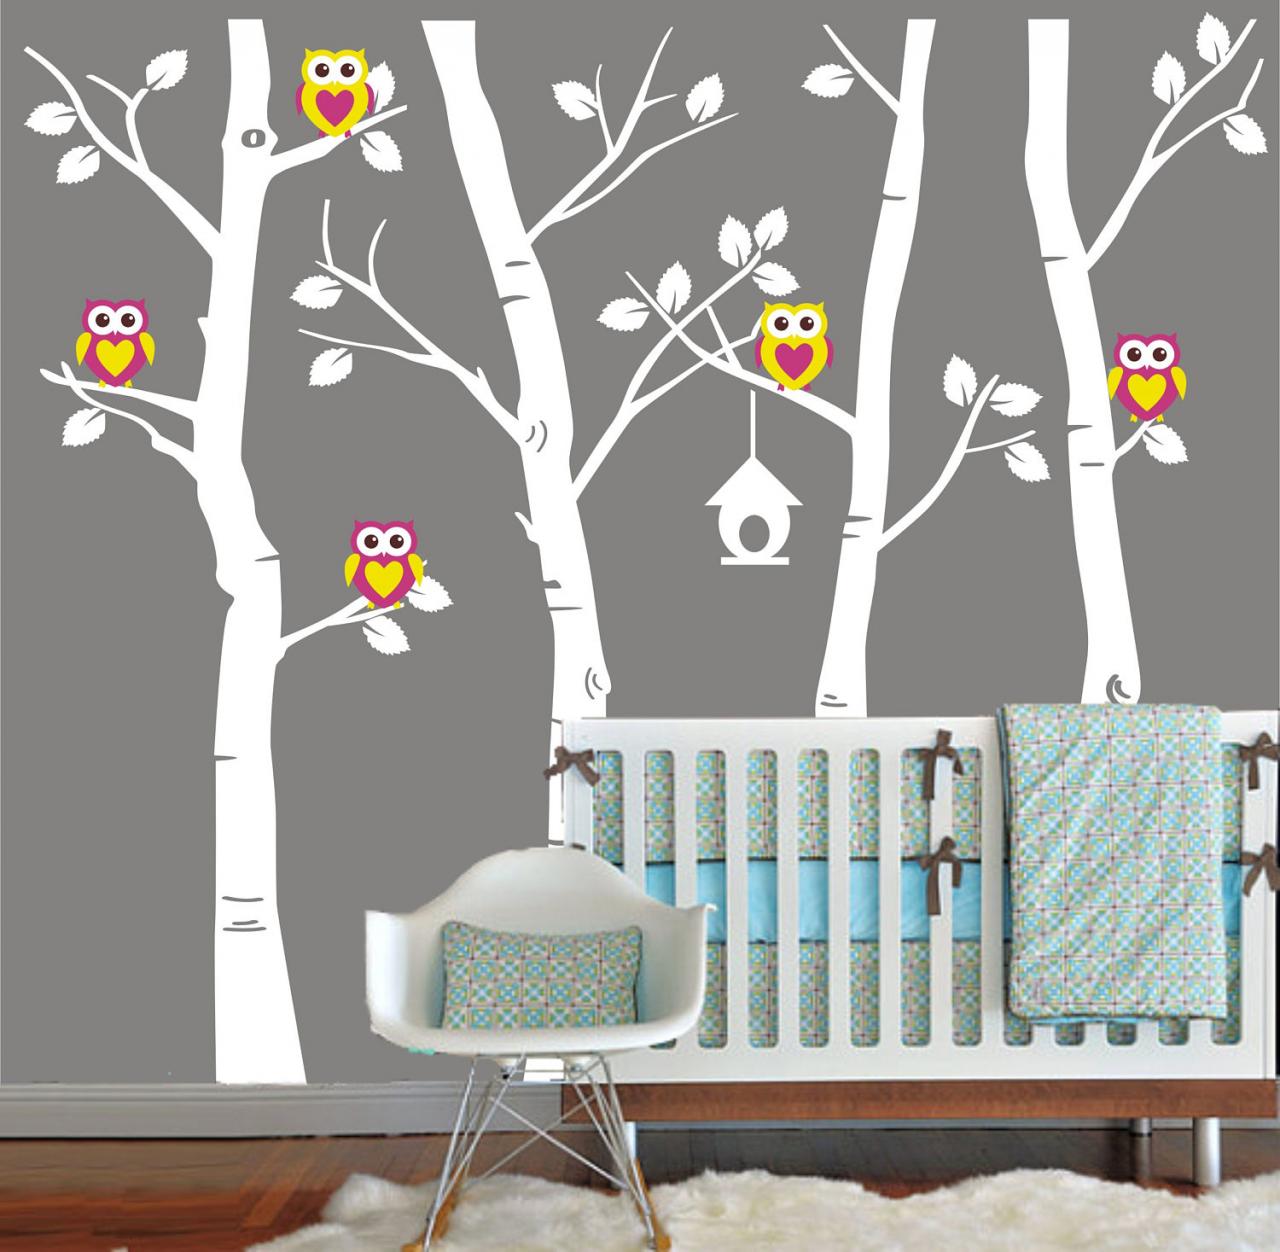 Nursery Vinyl Wall Decal Cute Owl Family Birch Tree Decals Trees Owls Bird Birds Home House Art Wall Stickers Baby Room Kid H827